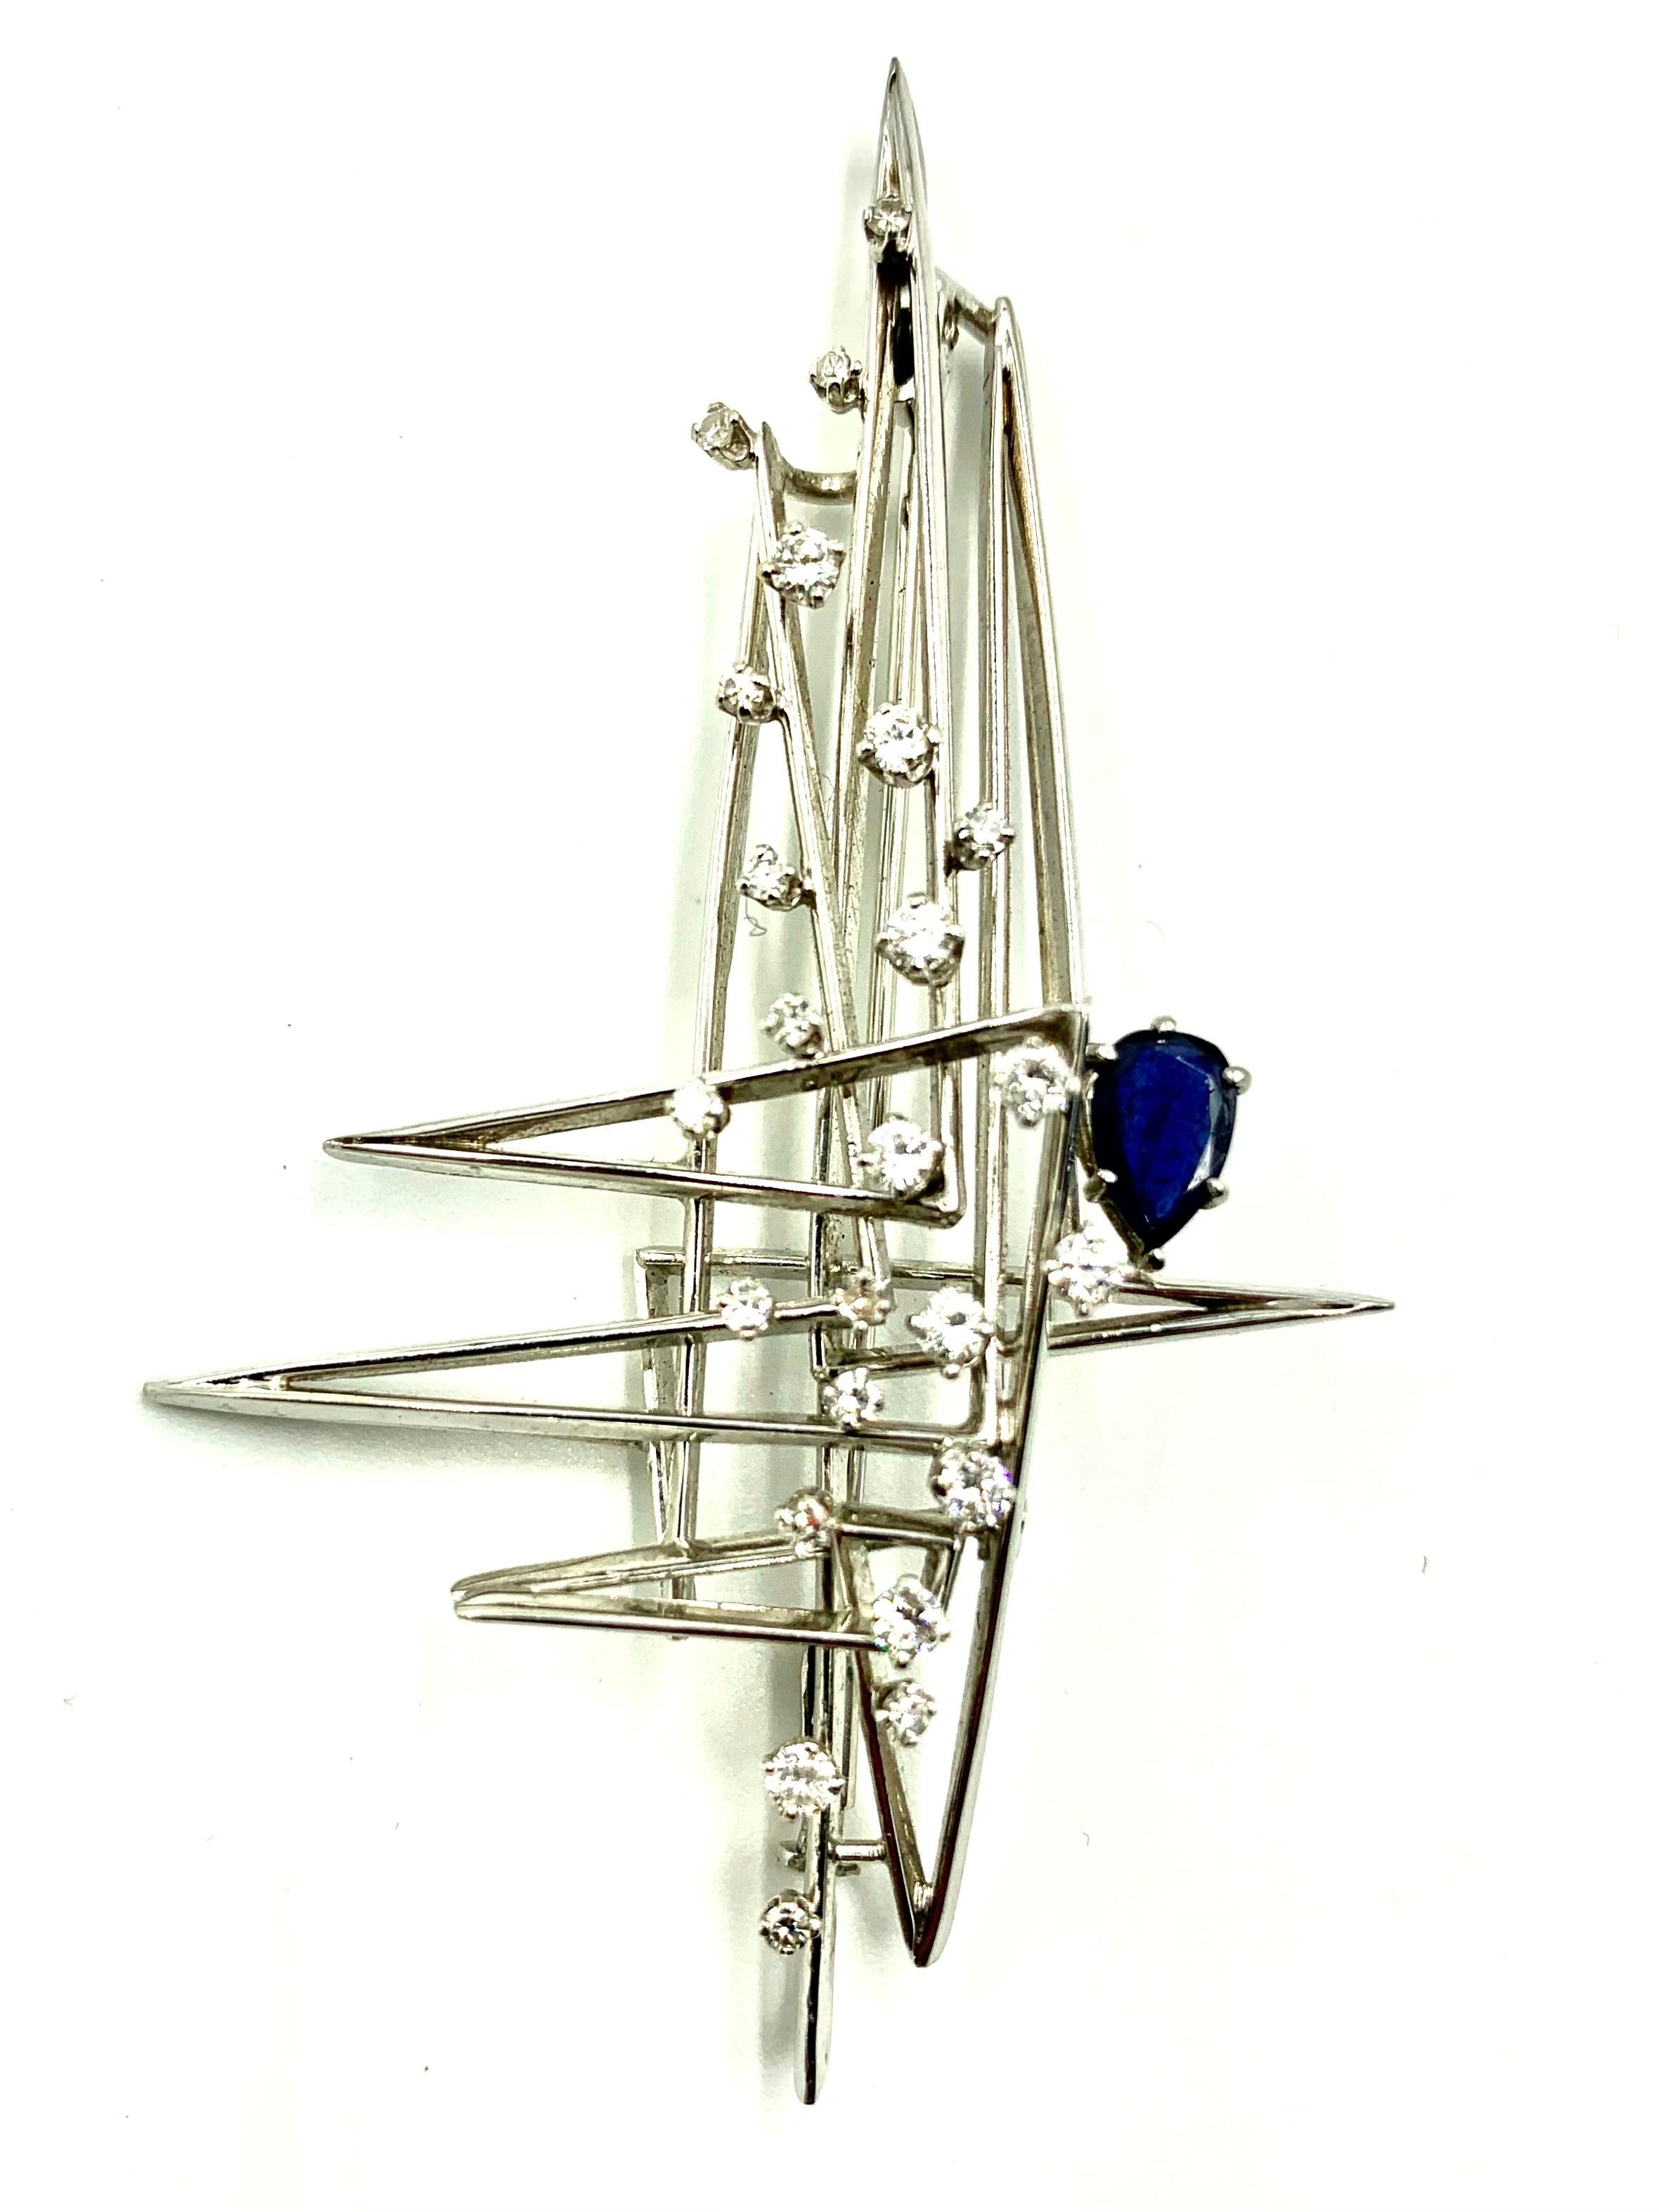 Toni Cavelti Diamond, Sapphire 18k White Gold Yacht Nautical Pendant, Brooch 2